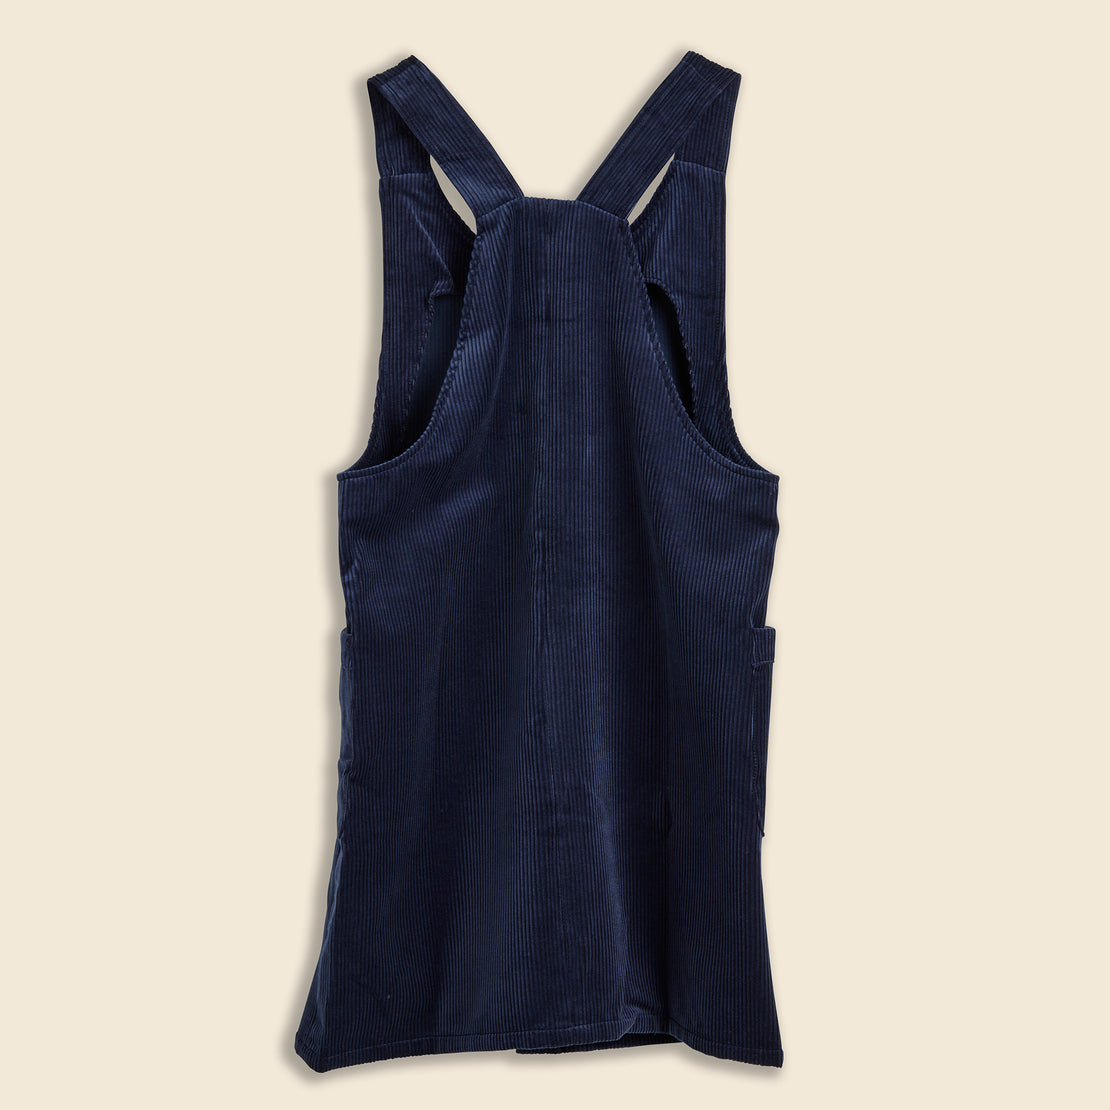 Rose - Corduroy Strap Dress - Navy - Le Mont Saint Michel - STAG Provisions - W - Onepiece - Dress